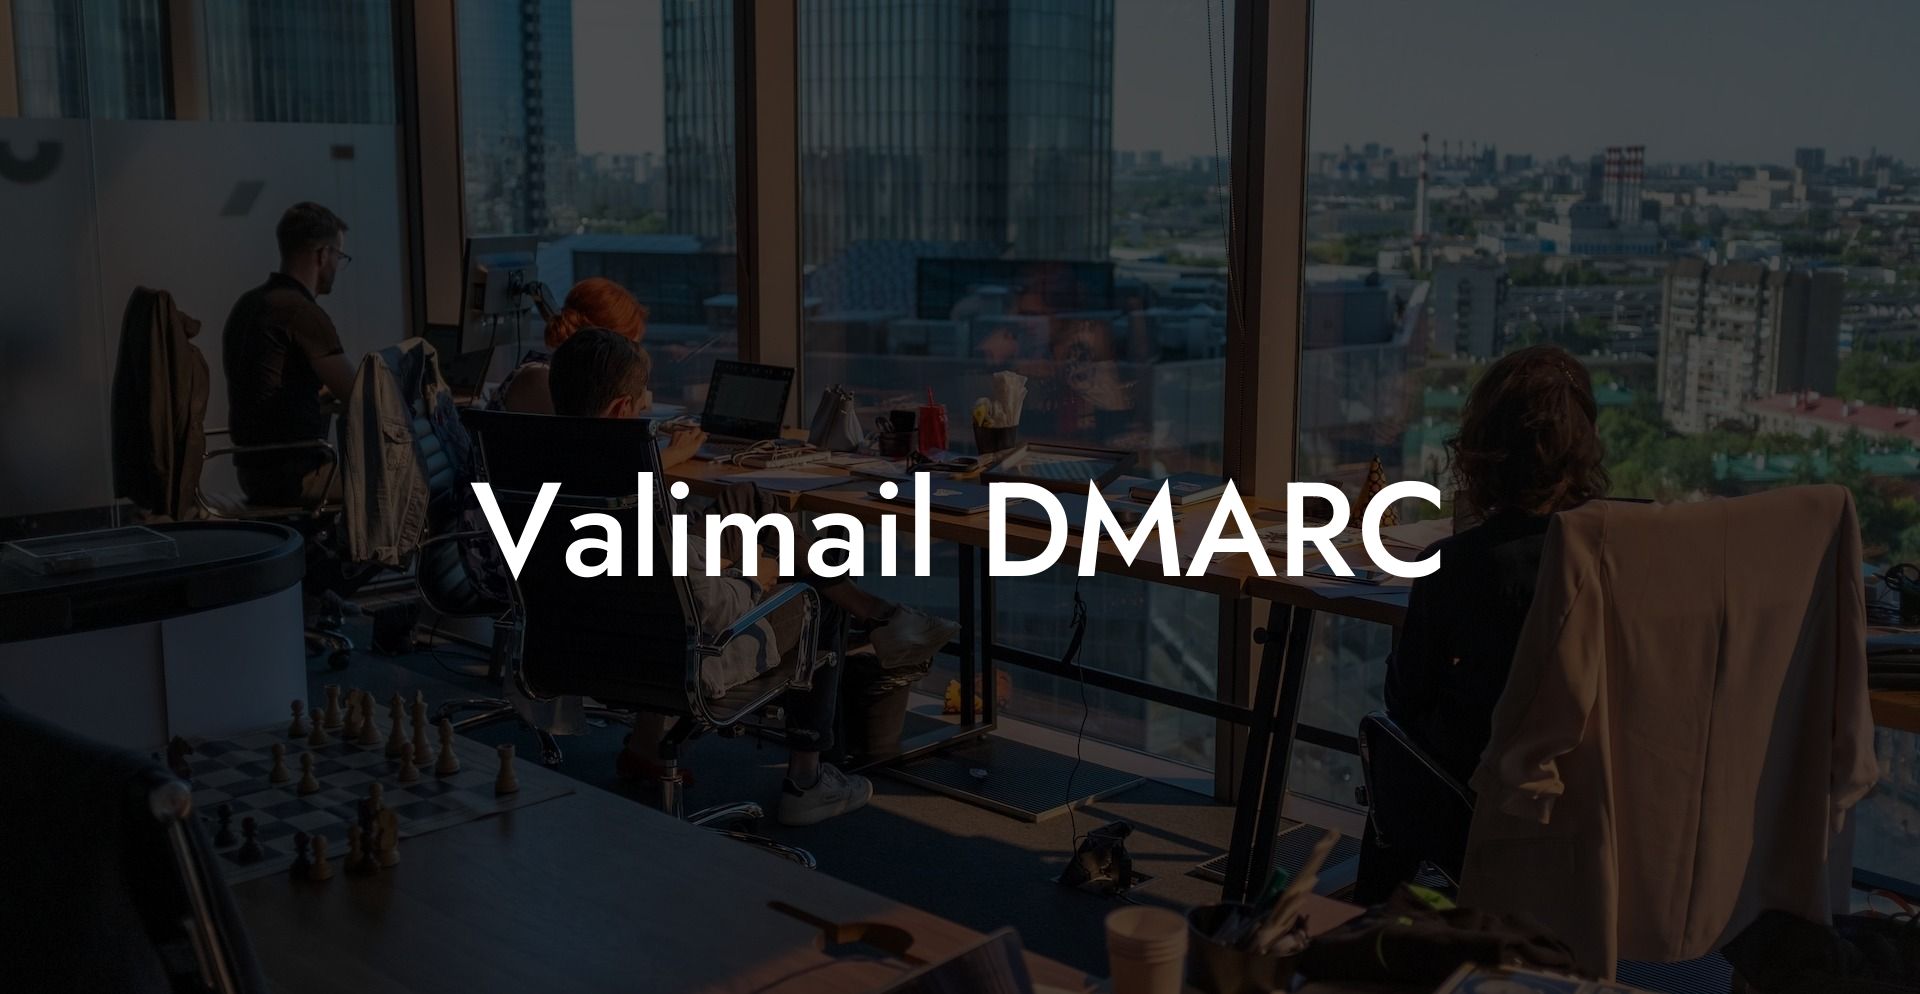 Valimail DMARC